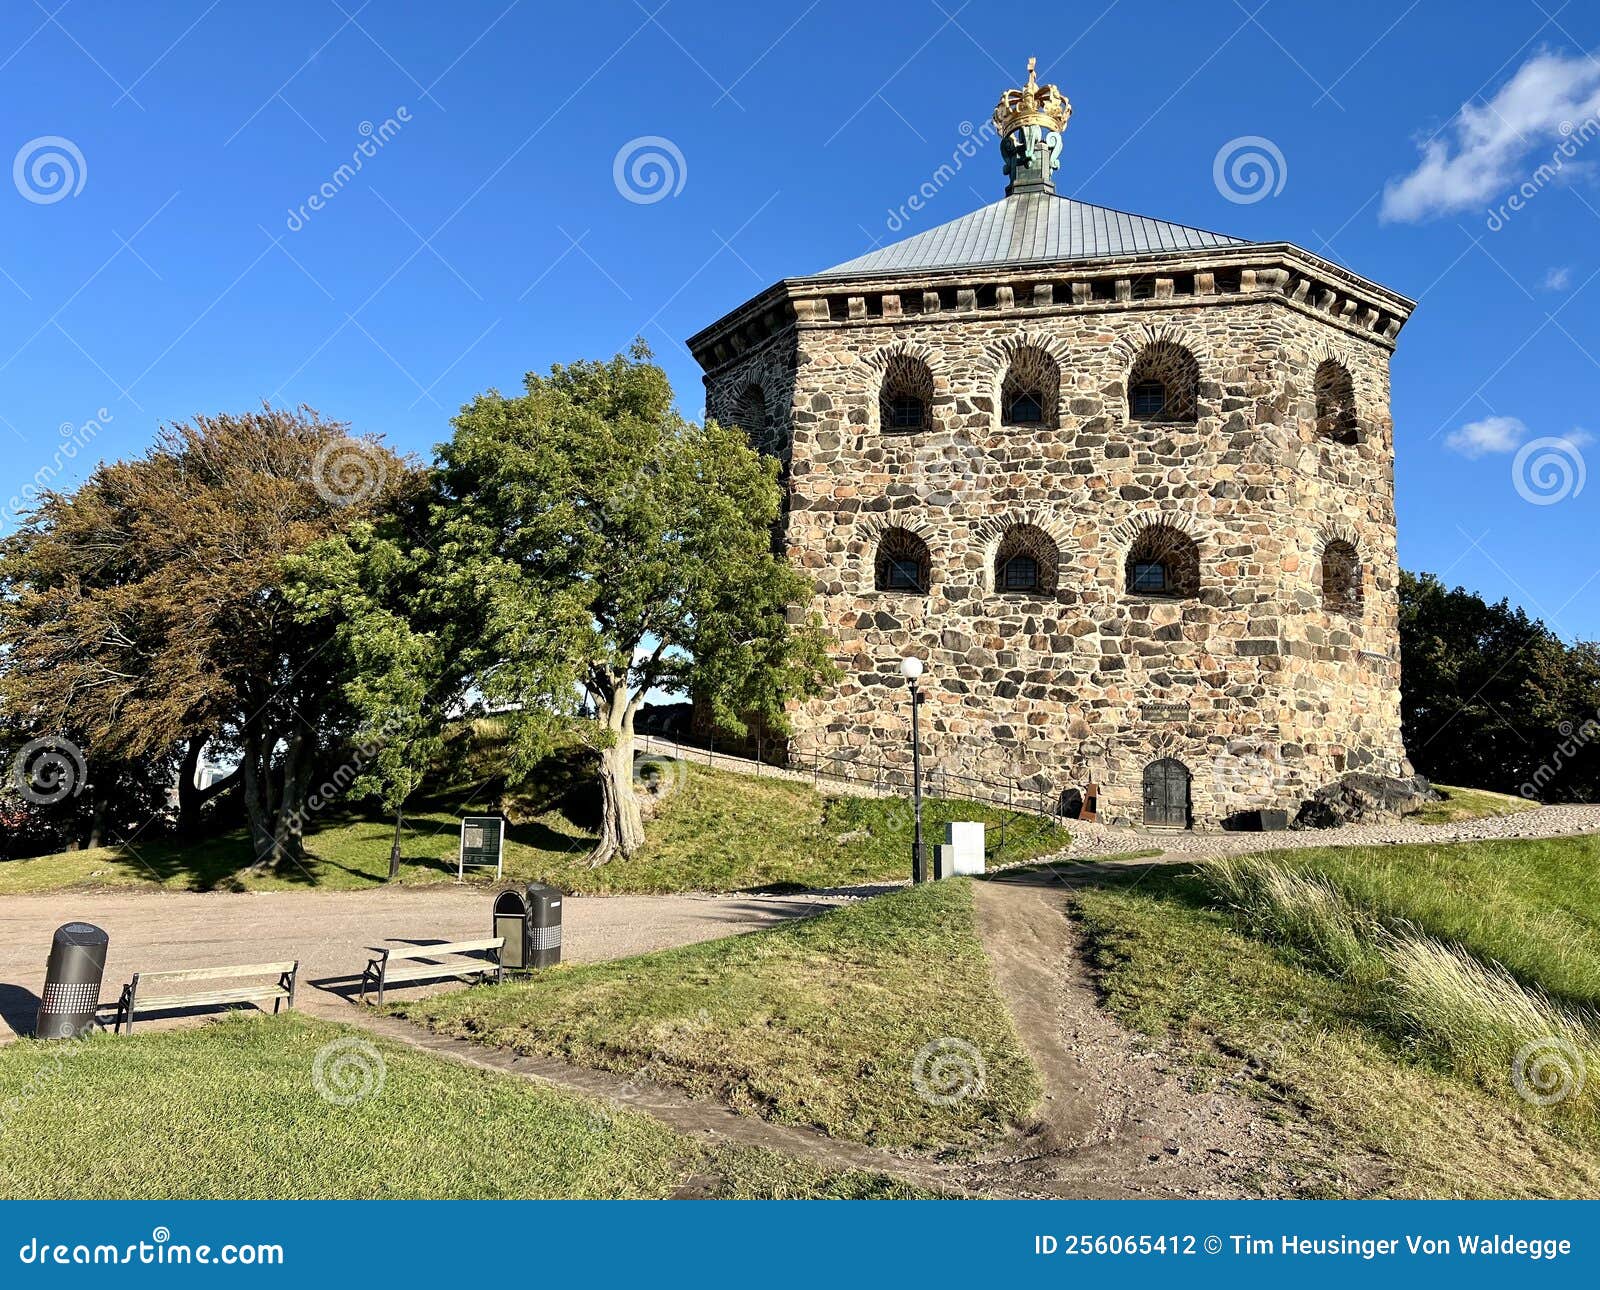 skansen kronan, a fortification on risÃ¥sberget in today's gothenburg district of haga